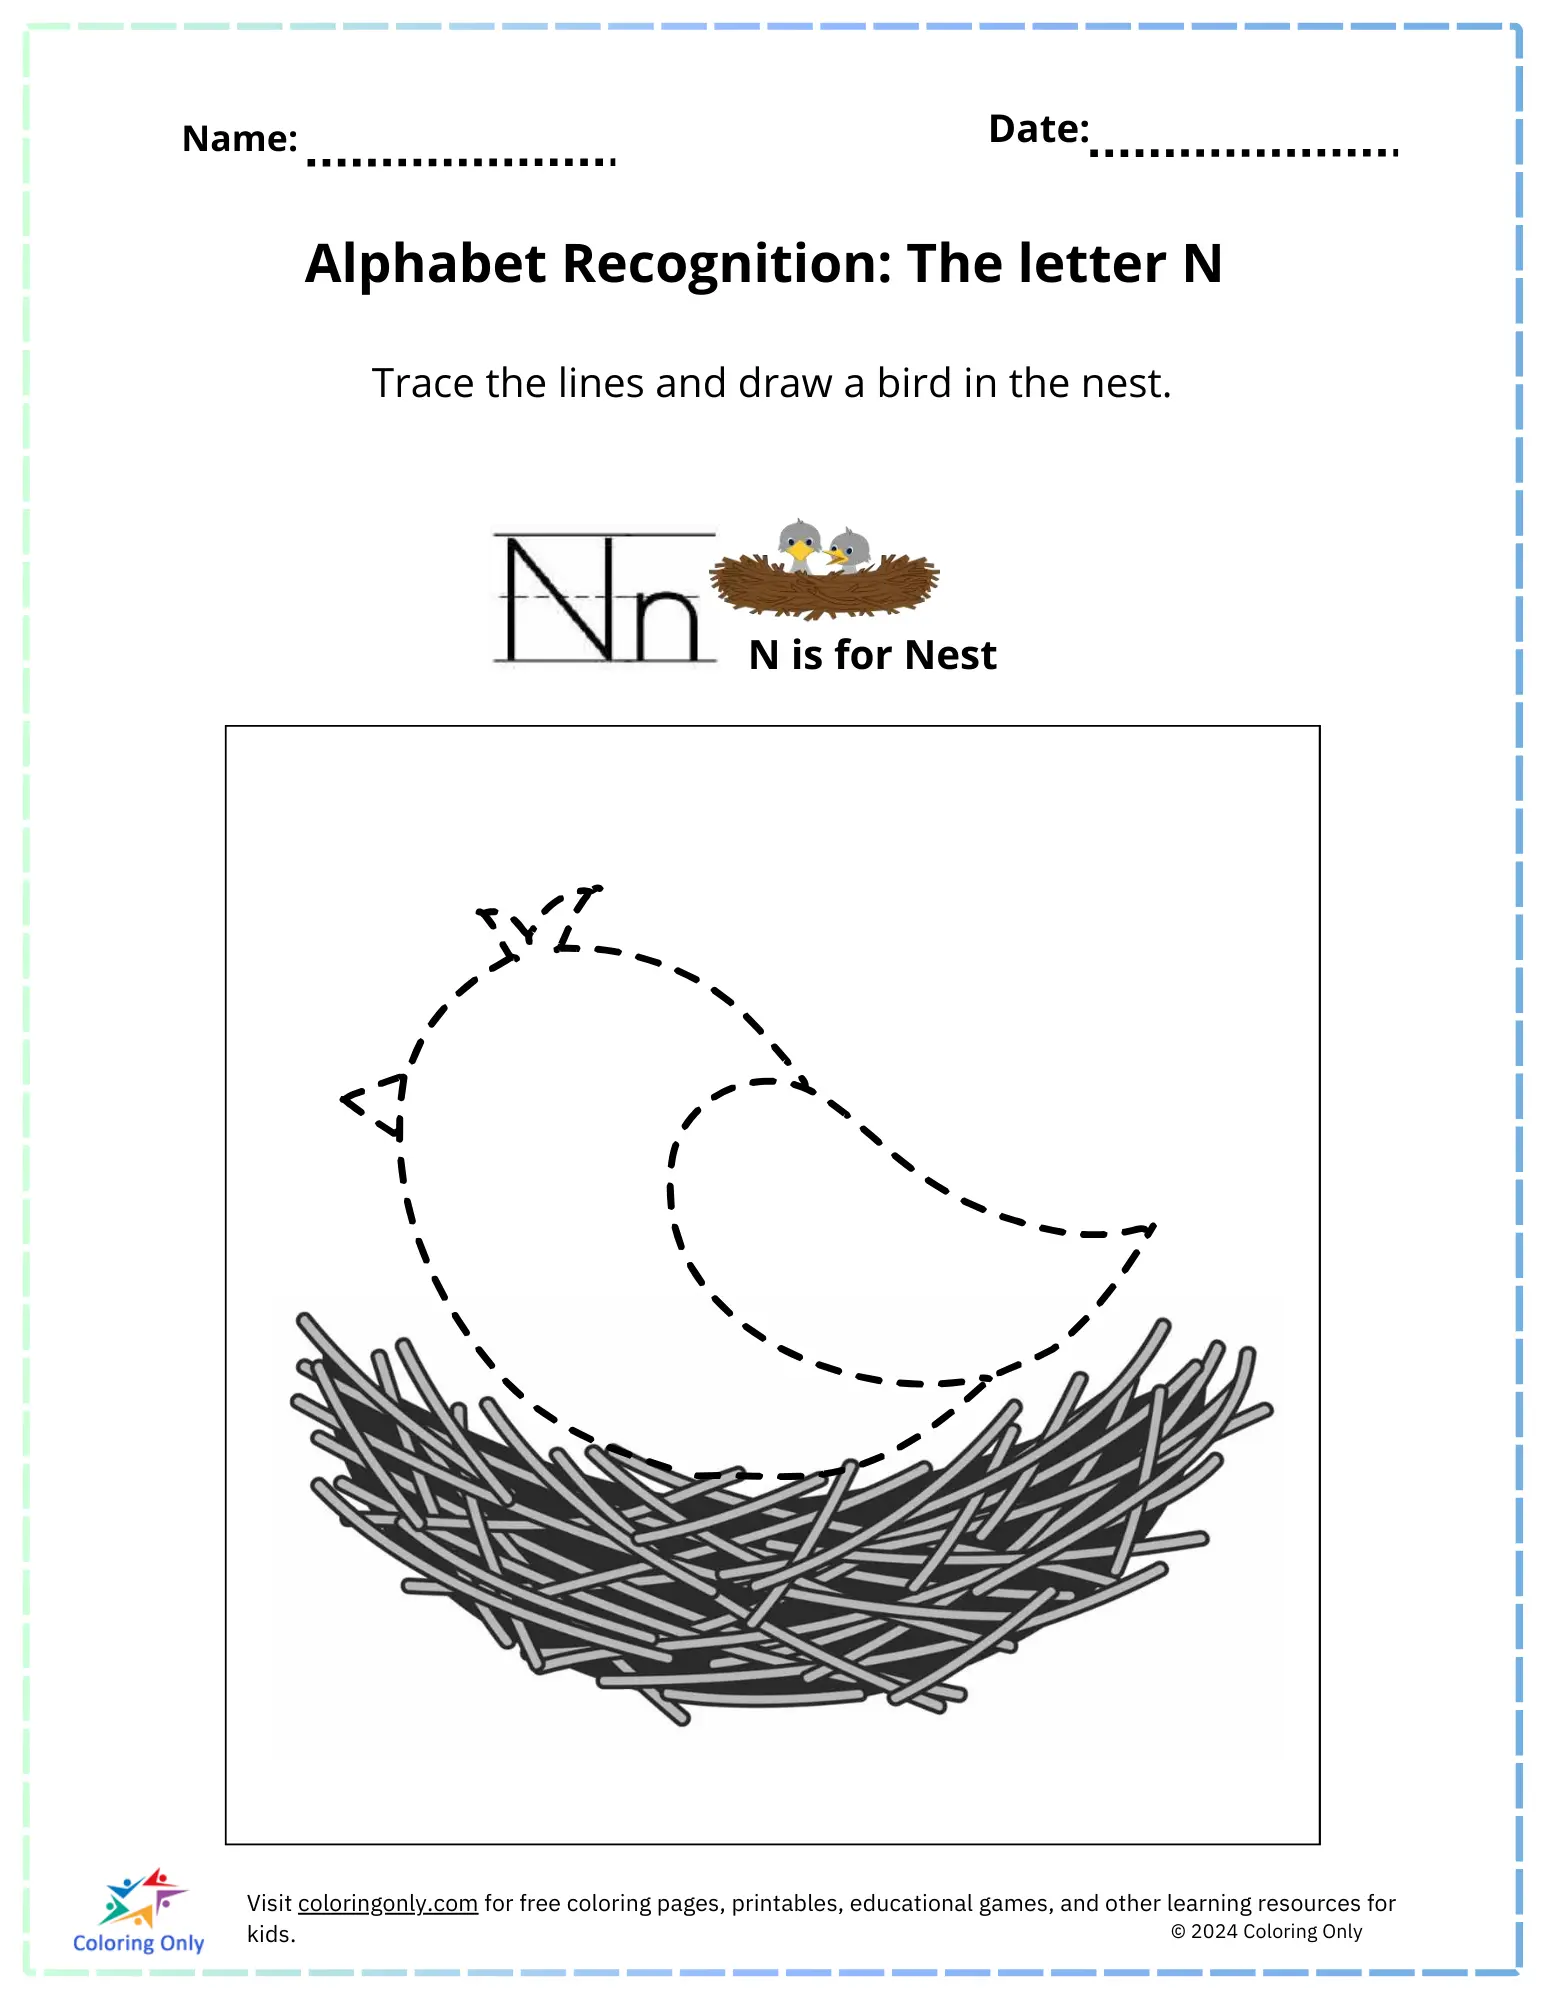 Alphabet Recognition: The Letter N Free Printable Worksheet